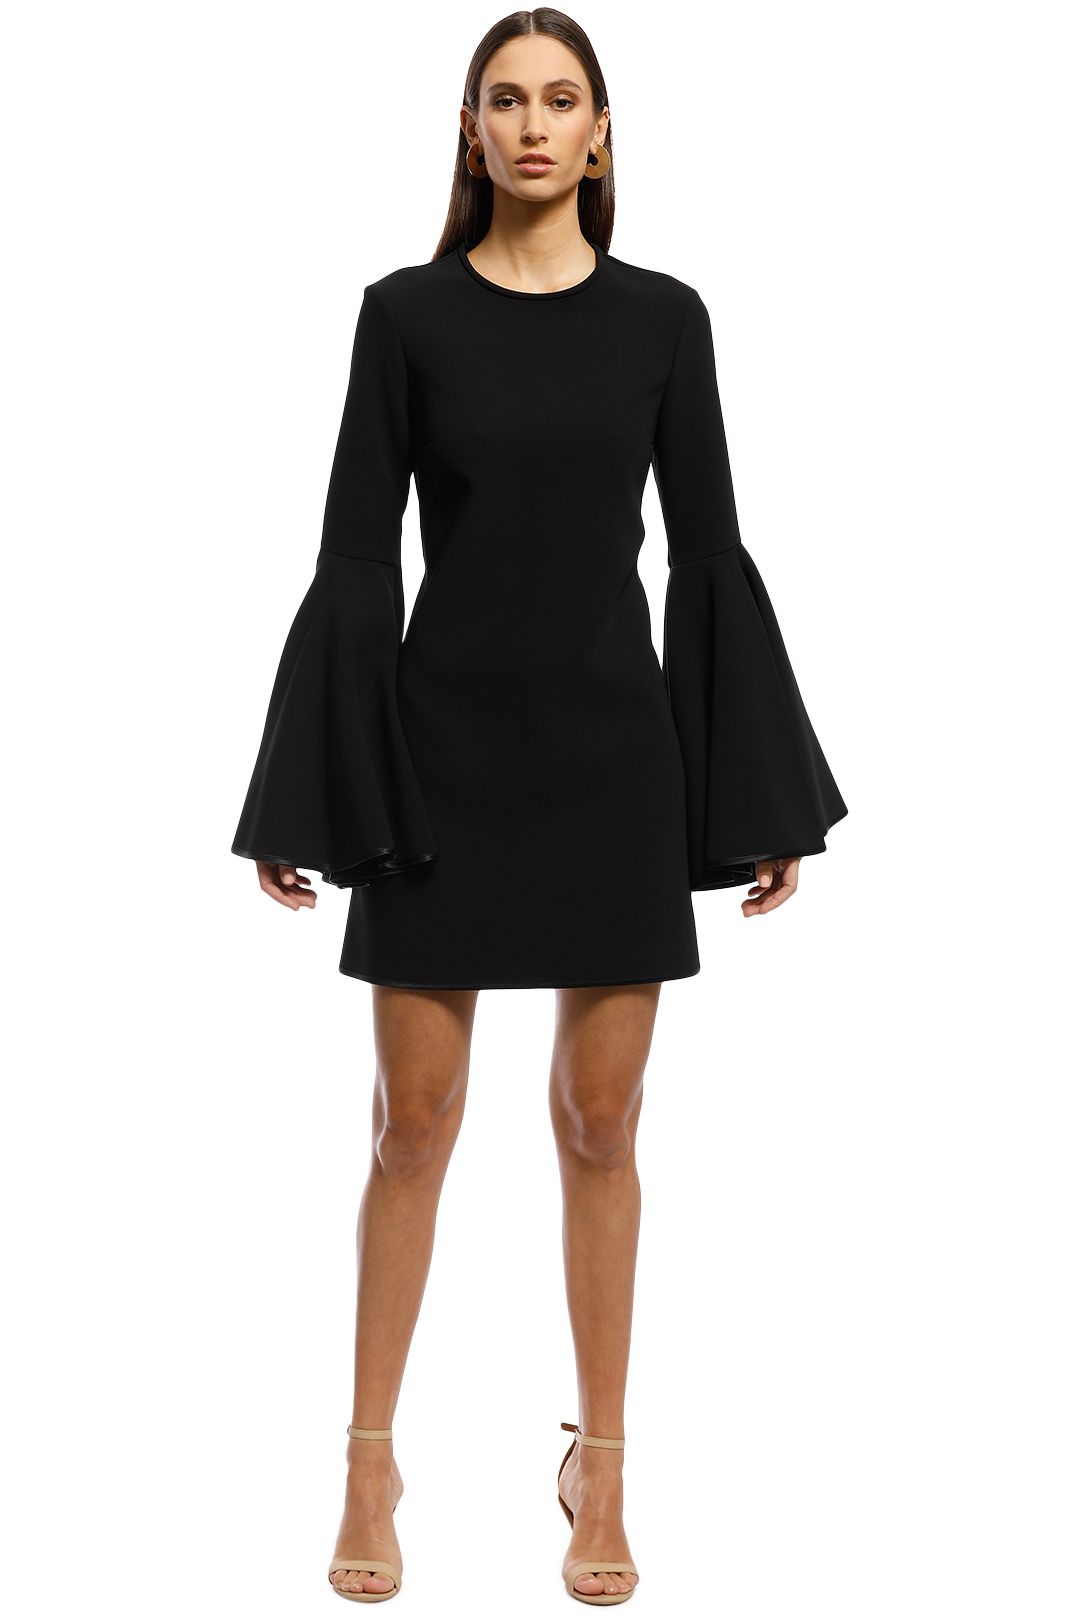 Ellery - Dogma Flare Sleeve Mini Dress - Black - Front